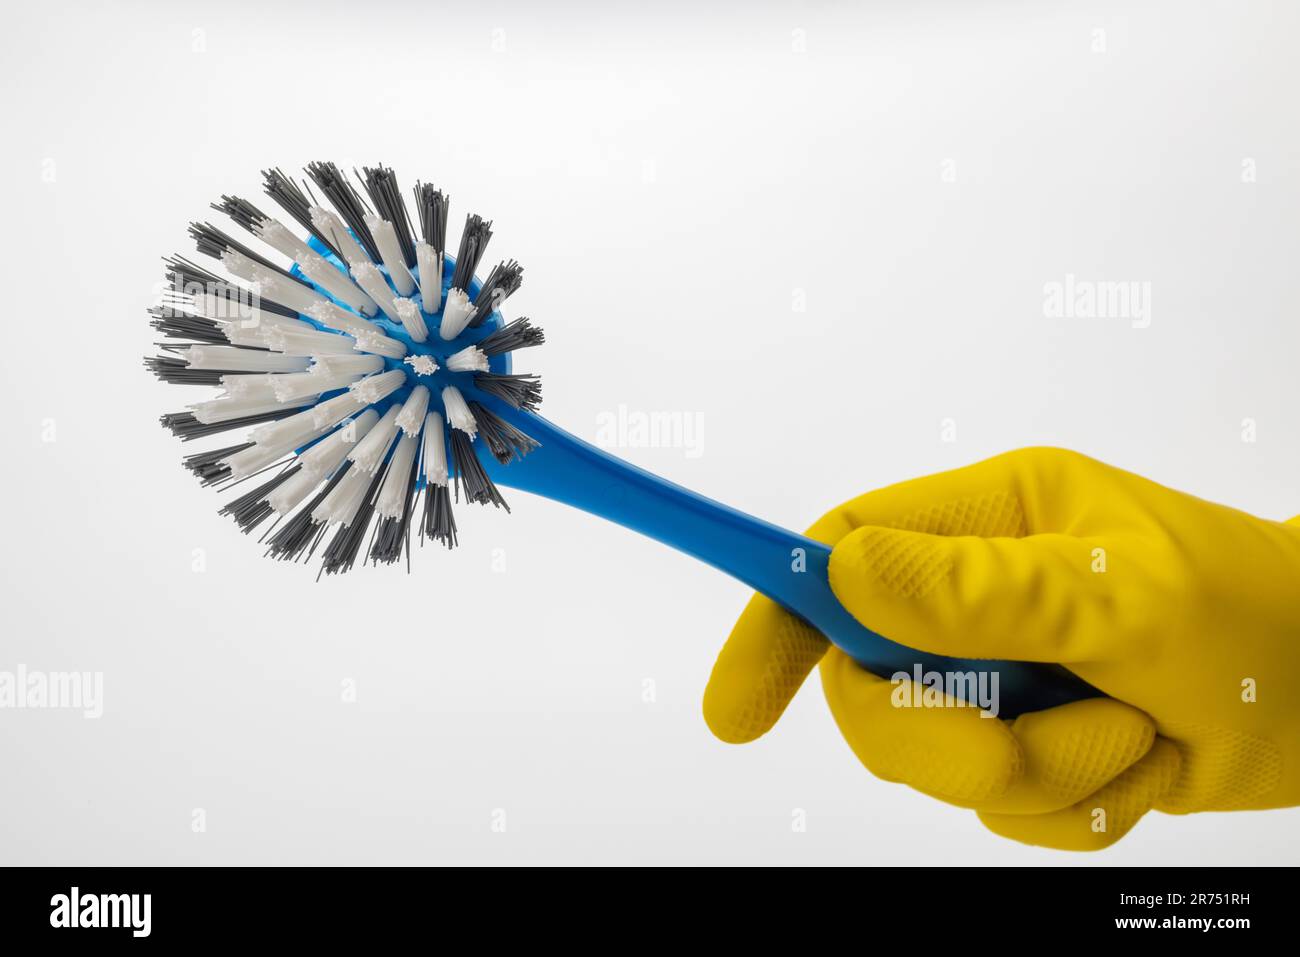 Hand with yellow protective glove holds blue dishwashing brush, white background, Stock Photo